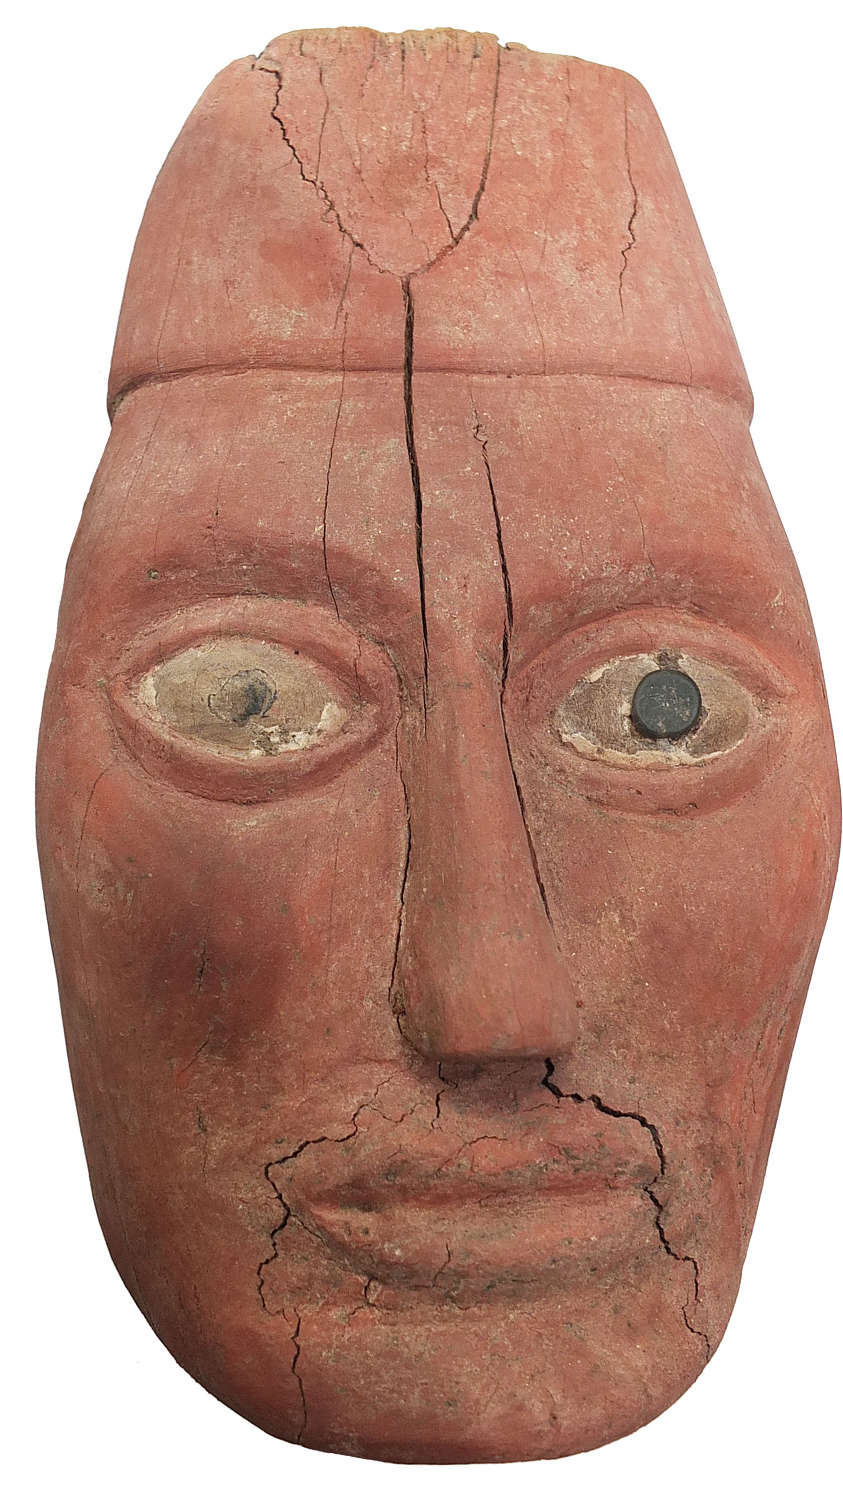 A Huari wooden mummy head reputedly found near Huarmey, Peru